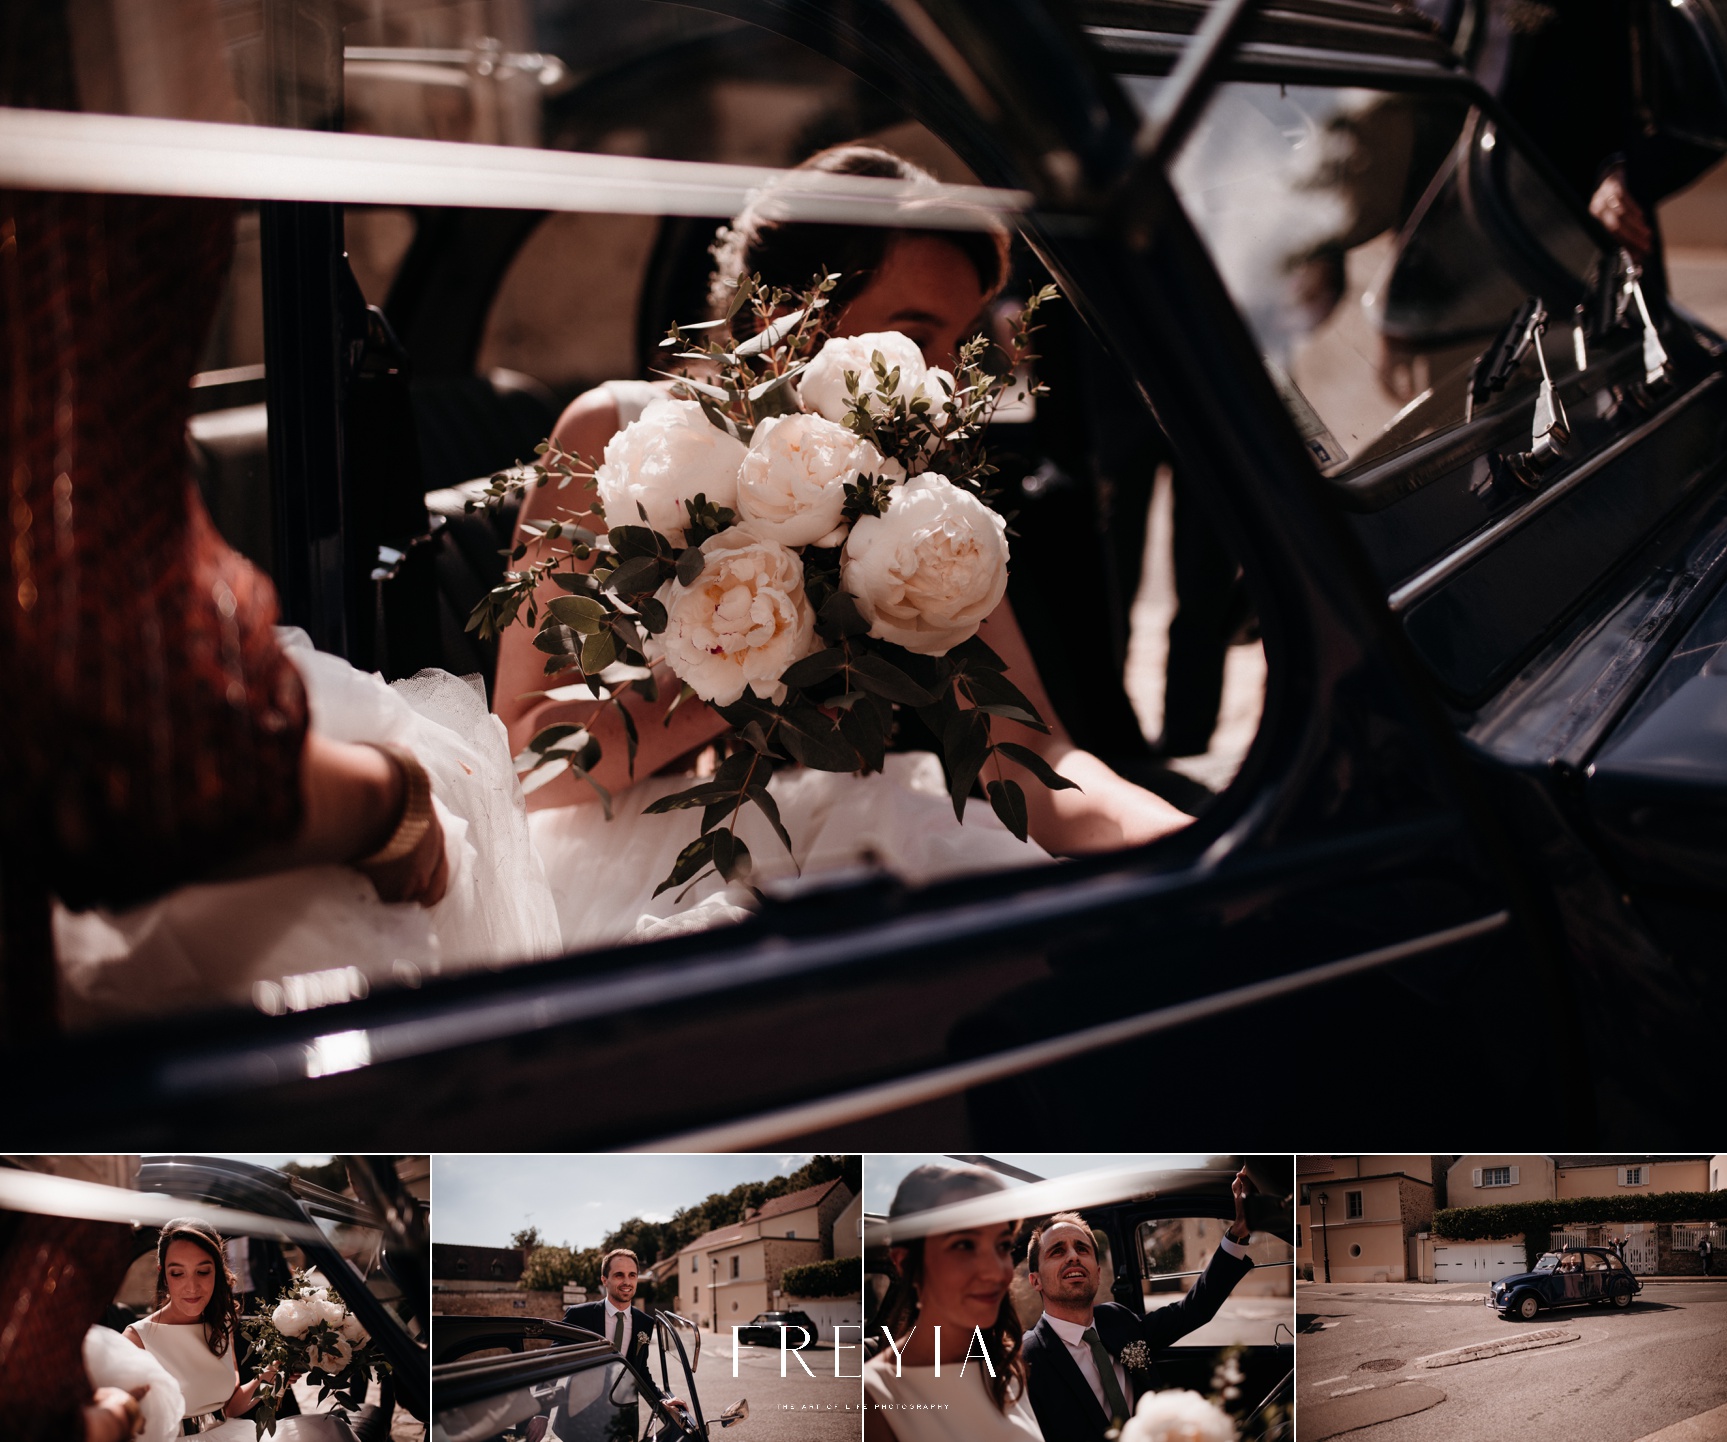 J + J|  mariage reportage alternatif moody intime vintage naturel boho boheme |  PHOTOGRAPHE mariage PARIS france destination  | FREYIA photography_-36.jpg (Copy)